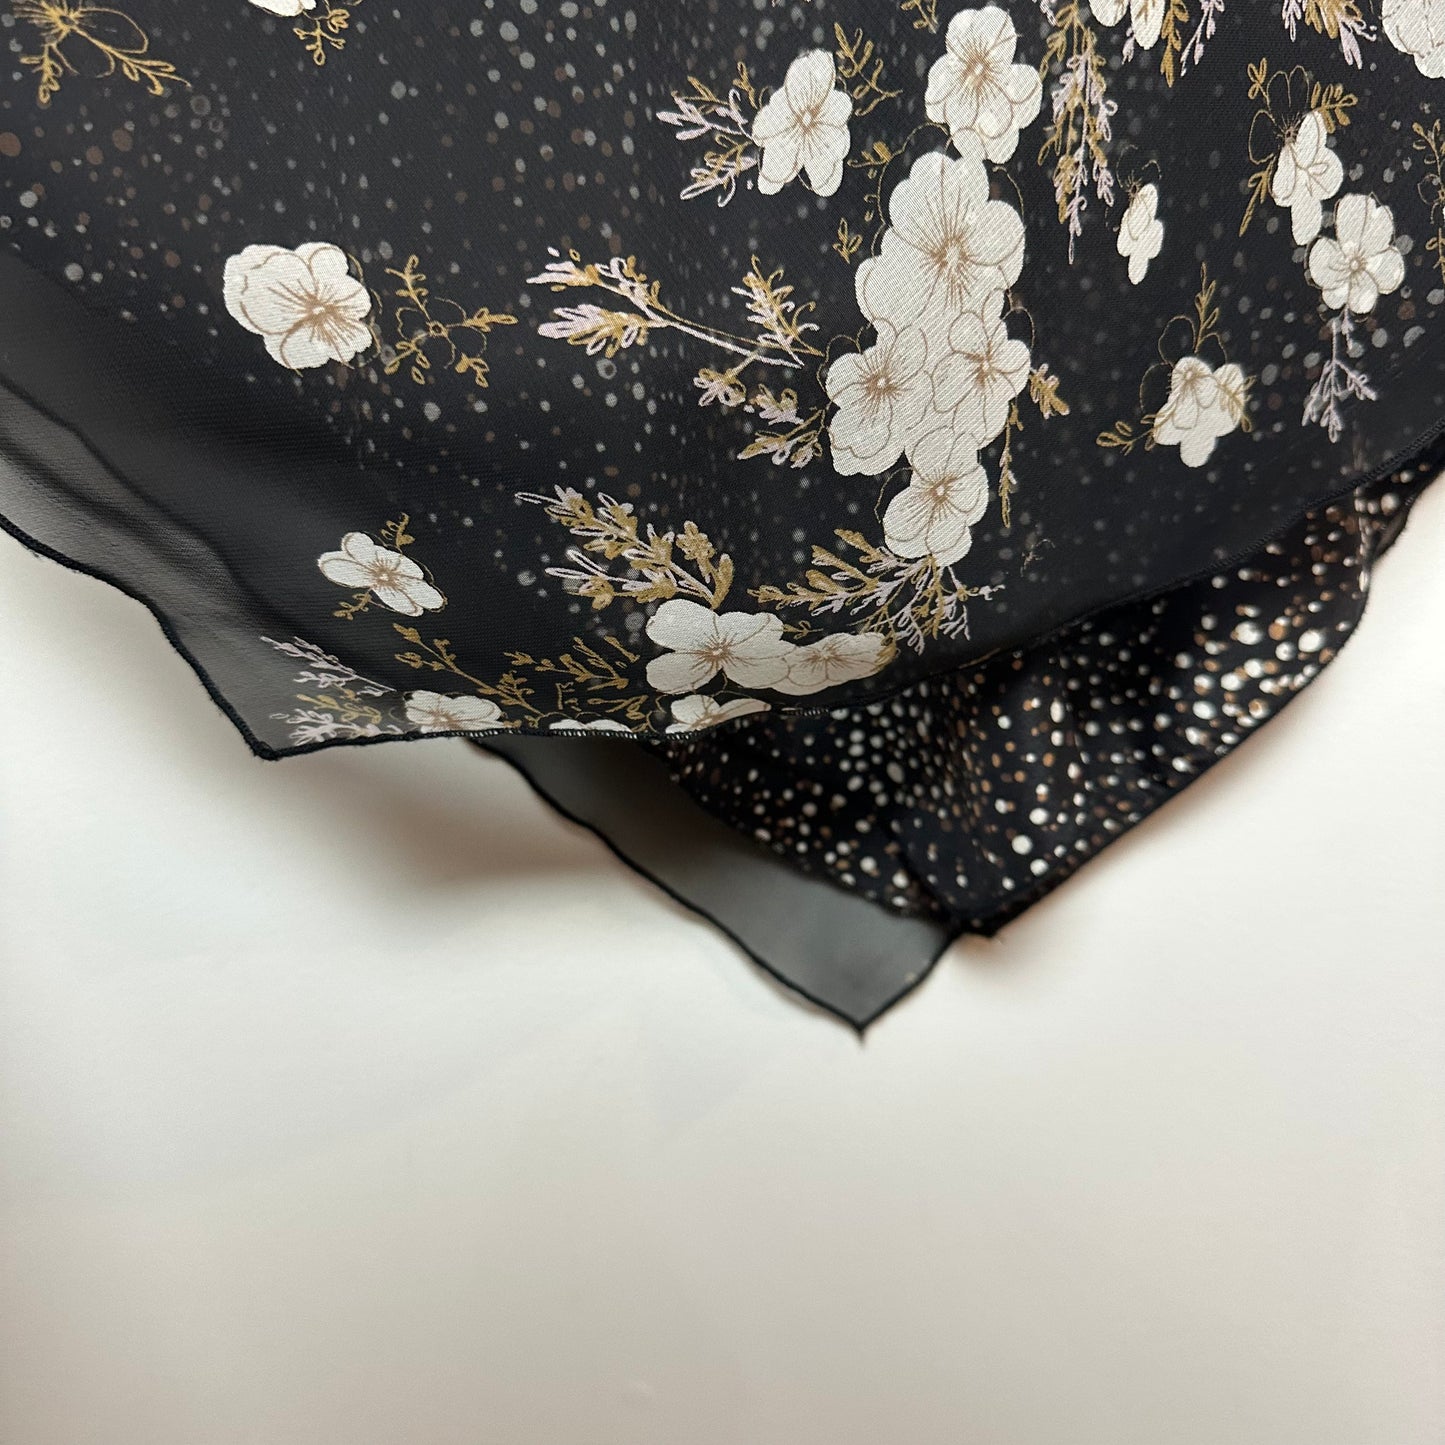 Vintage 90s CDC Floral Dress Sheer Short Sleeve Asymmetric Hem Layered Black 6 Petite